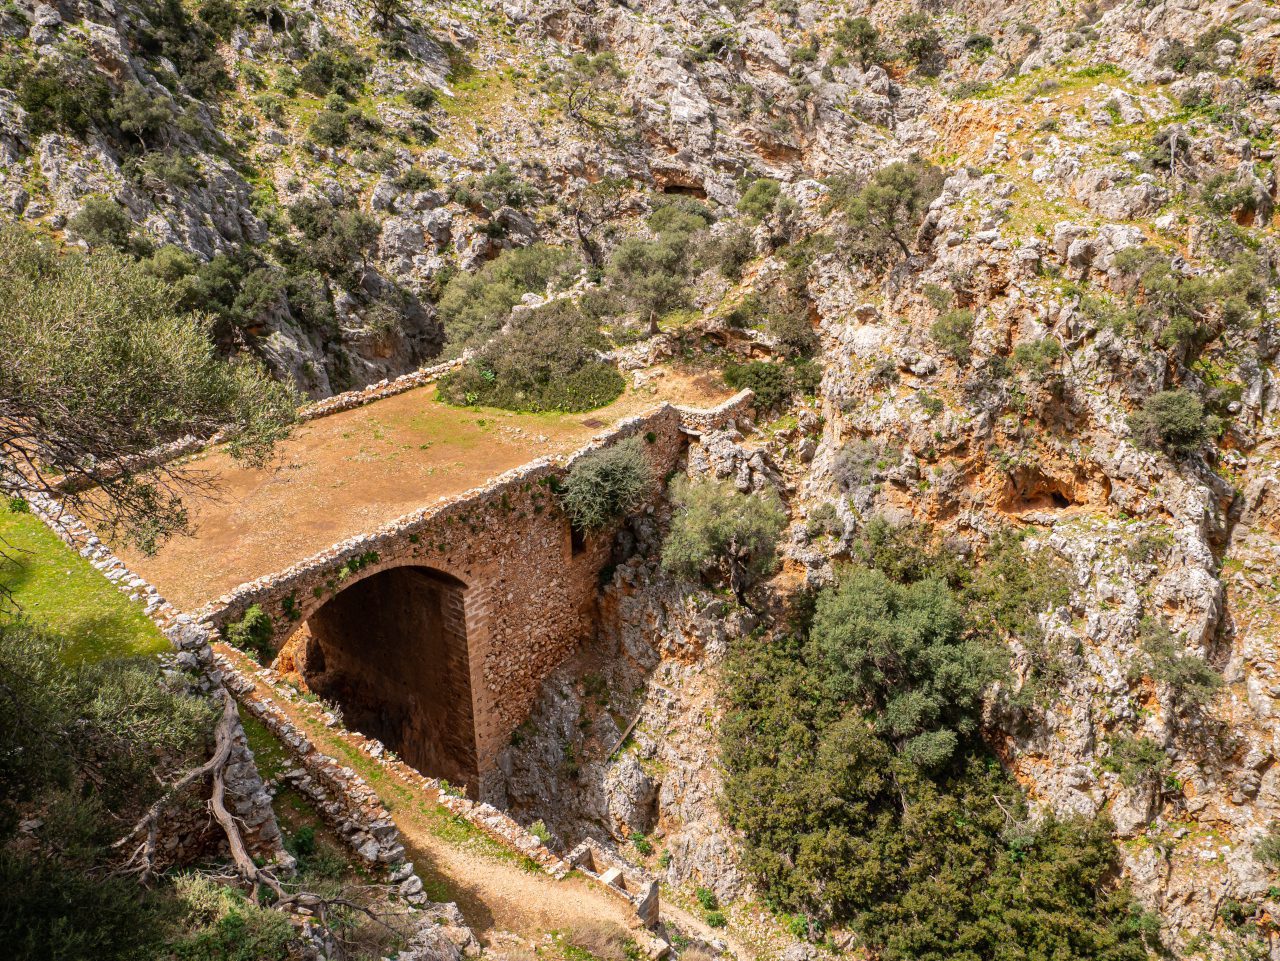 Kreta monastyr Katholiko widok z góry